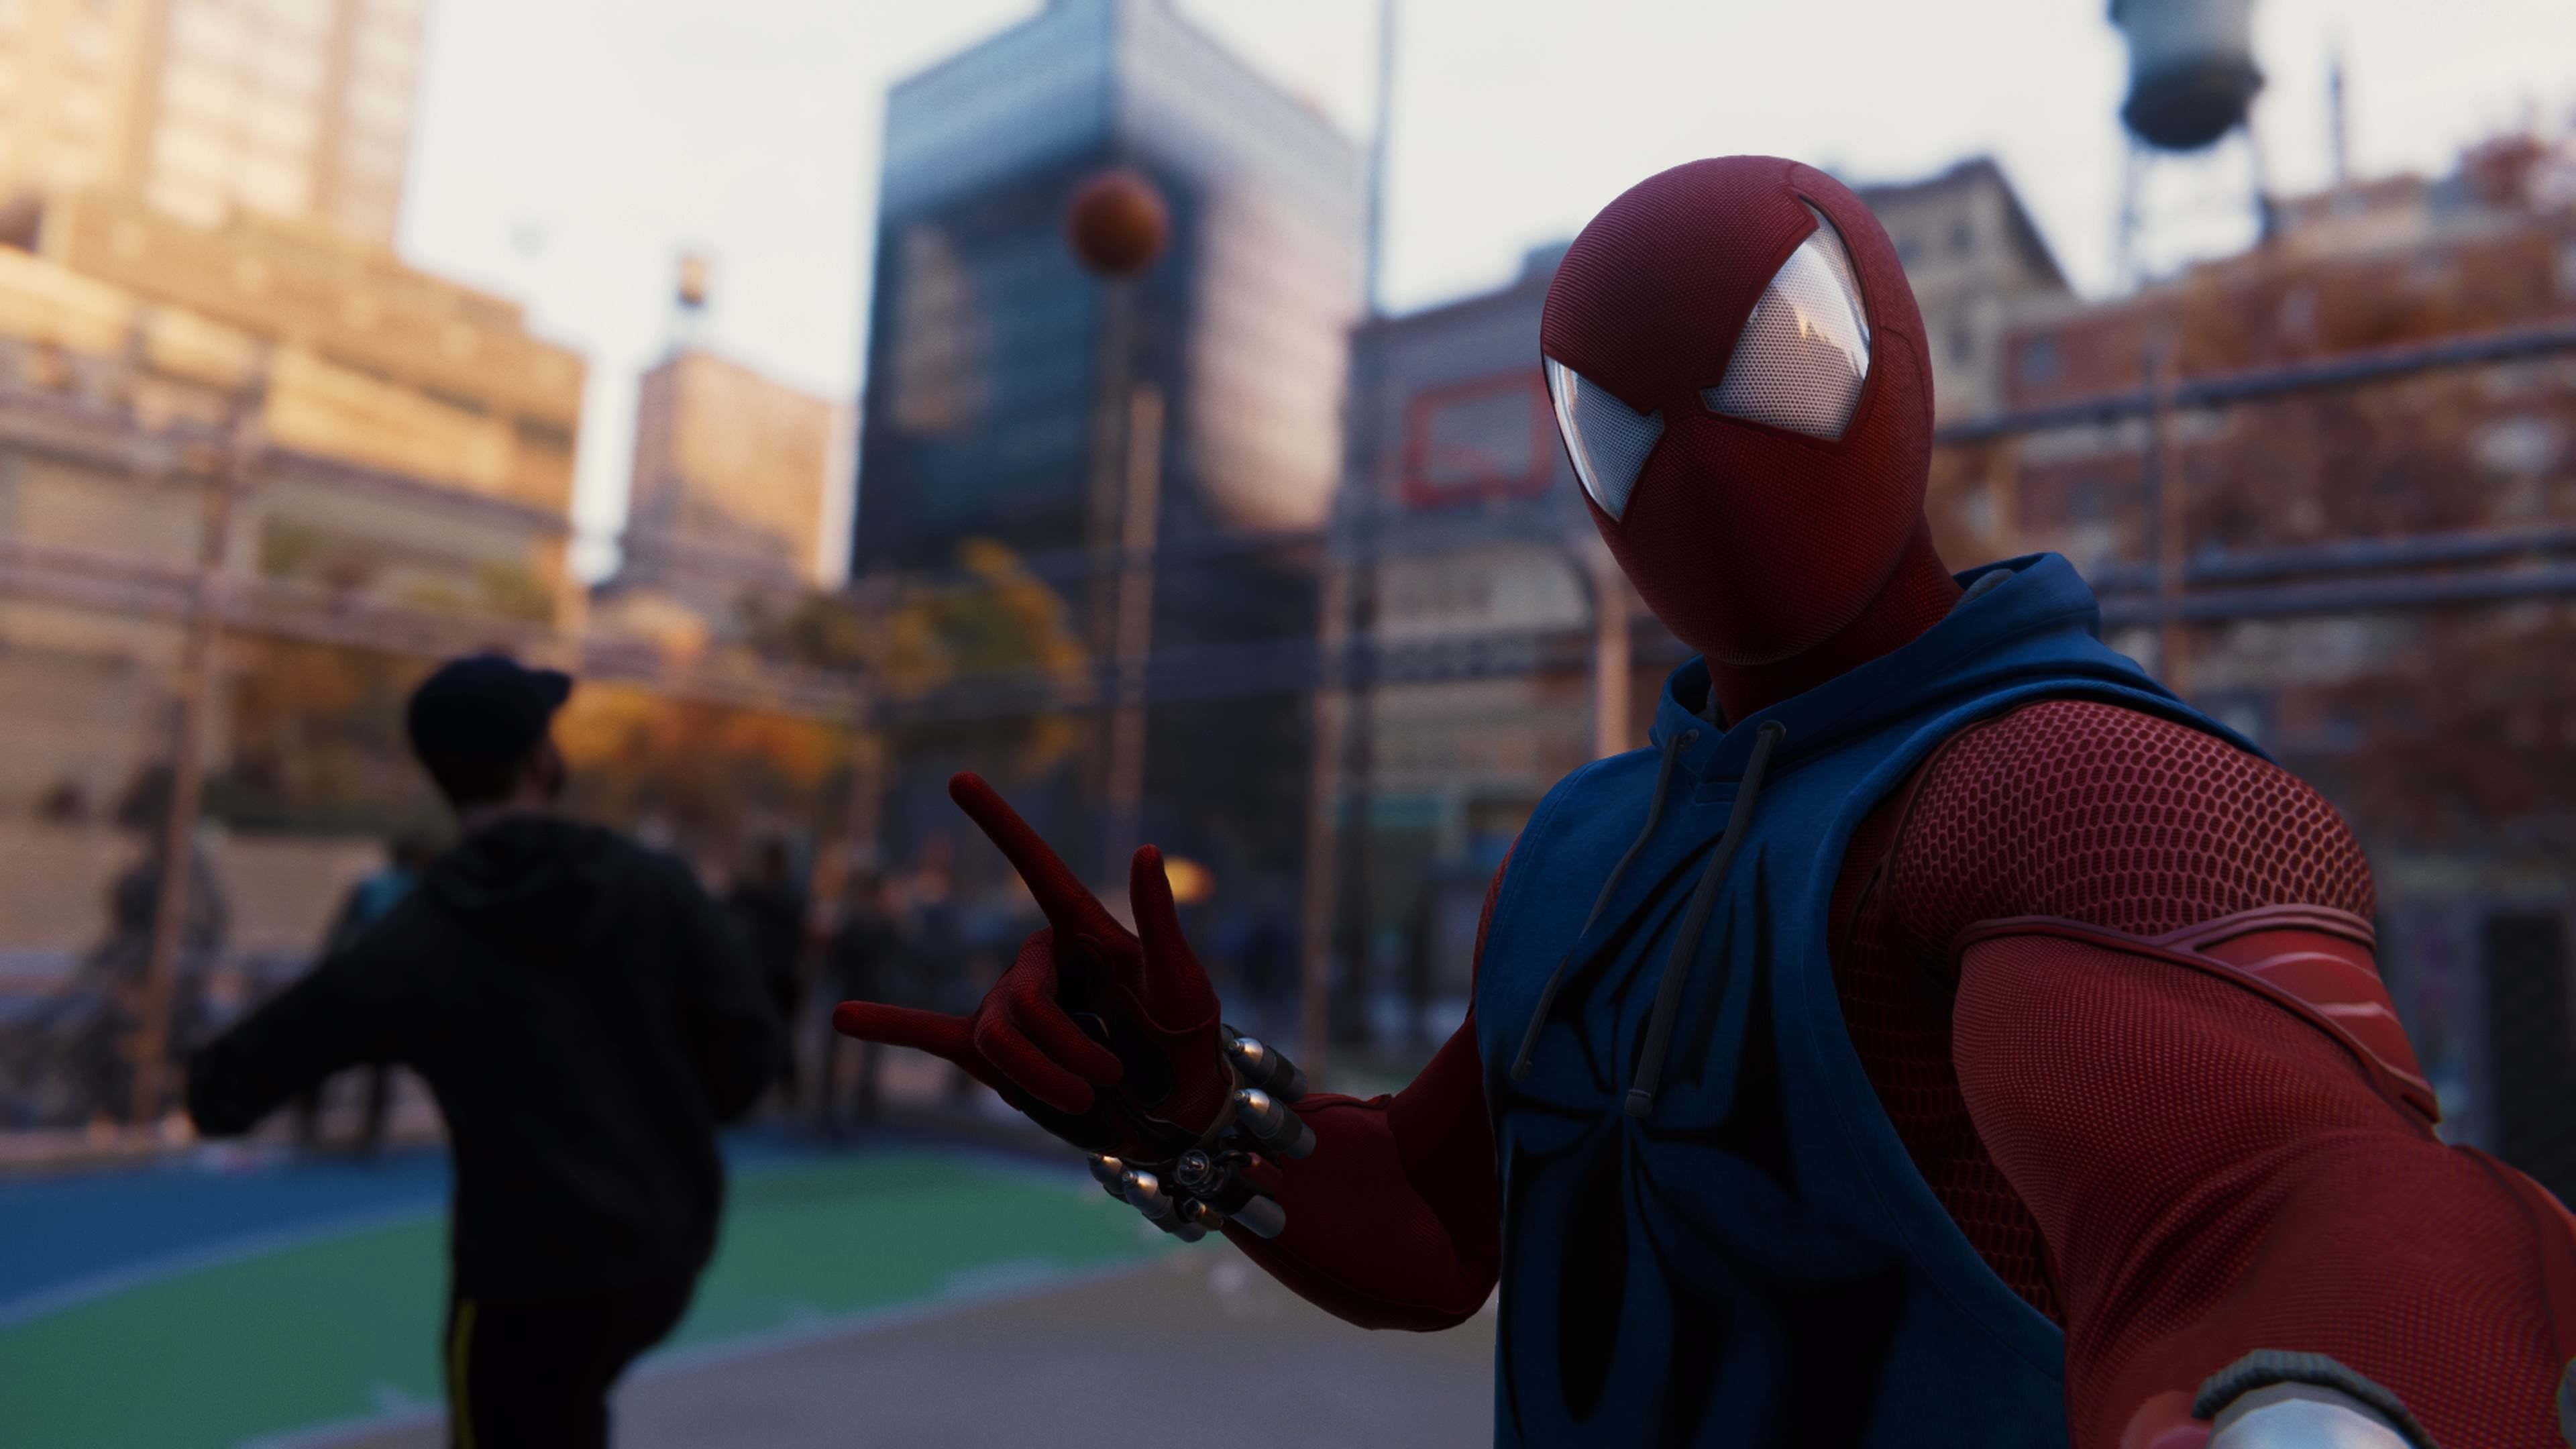 Spider Man Basketball Wallpaper: Gaming